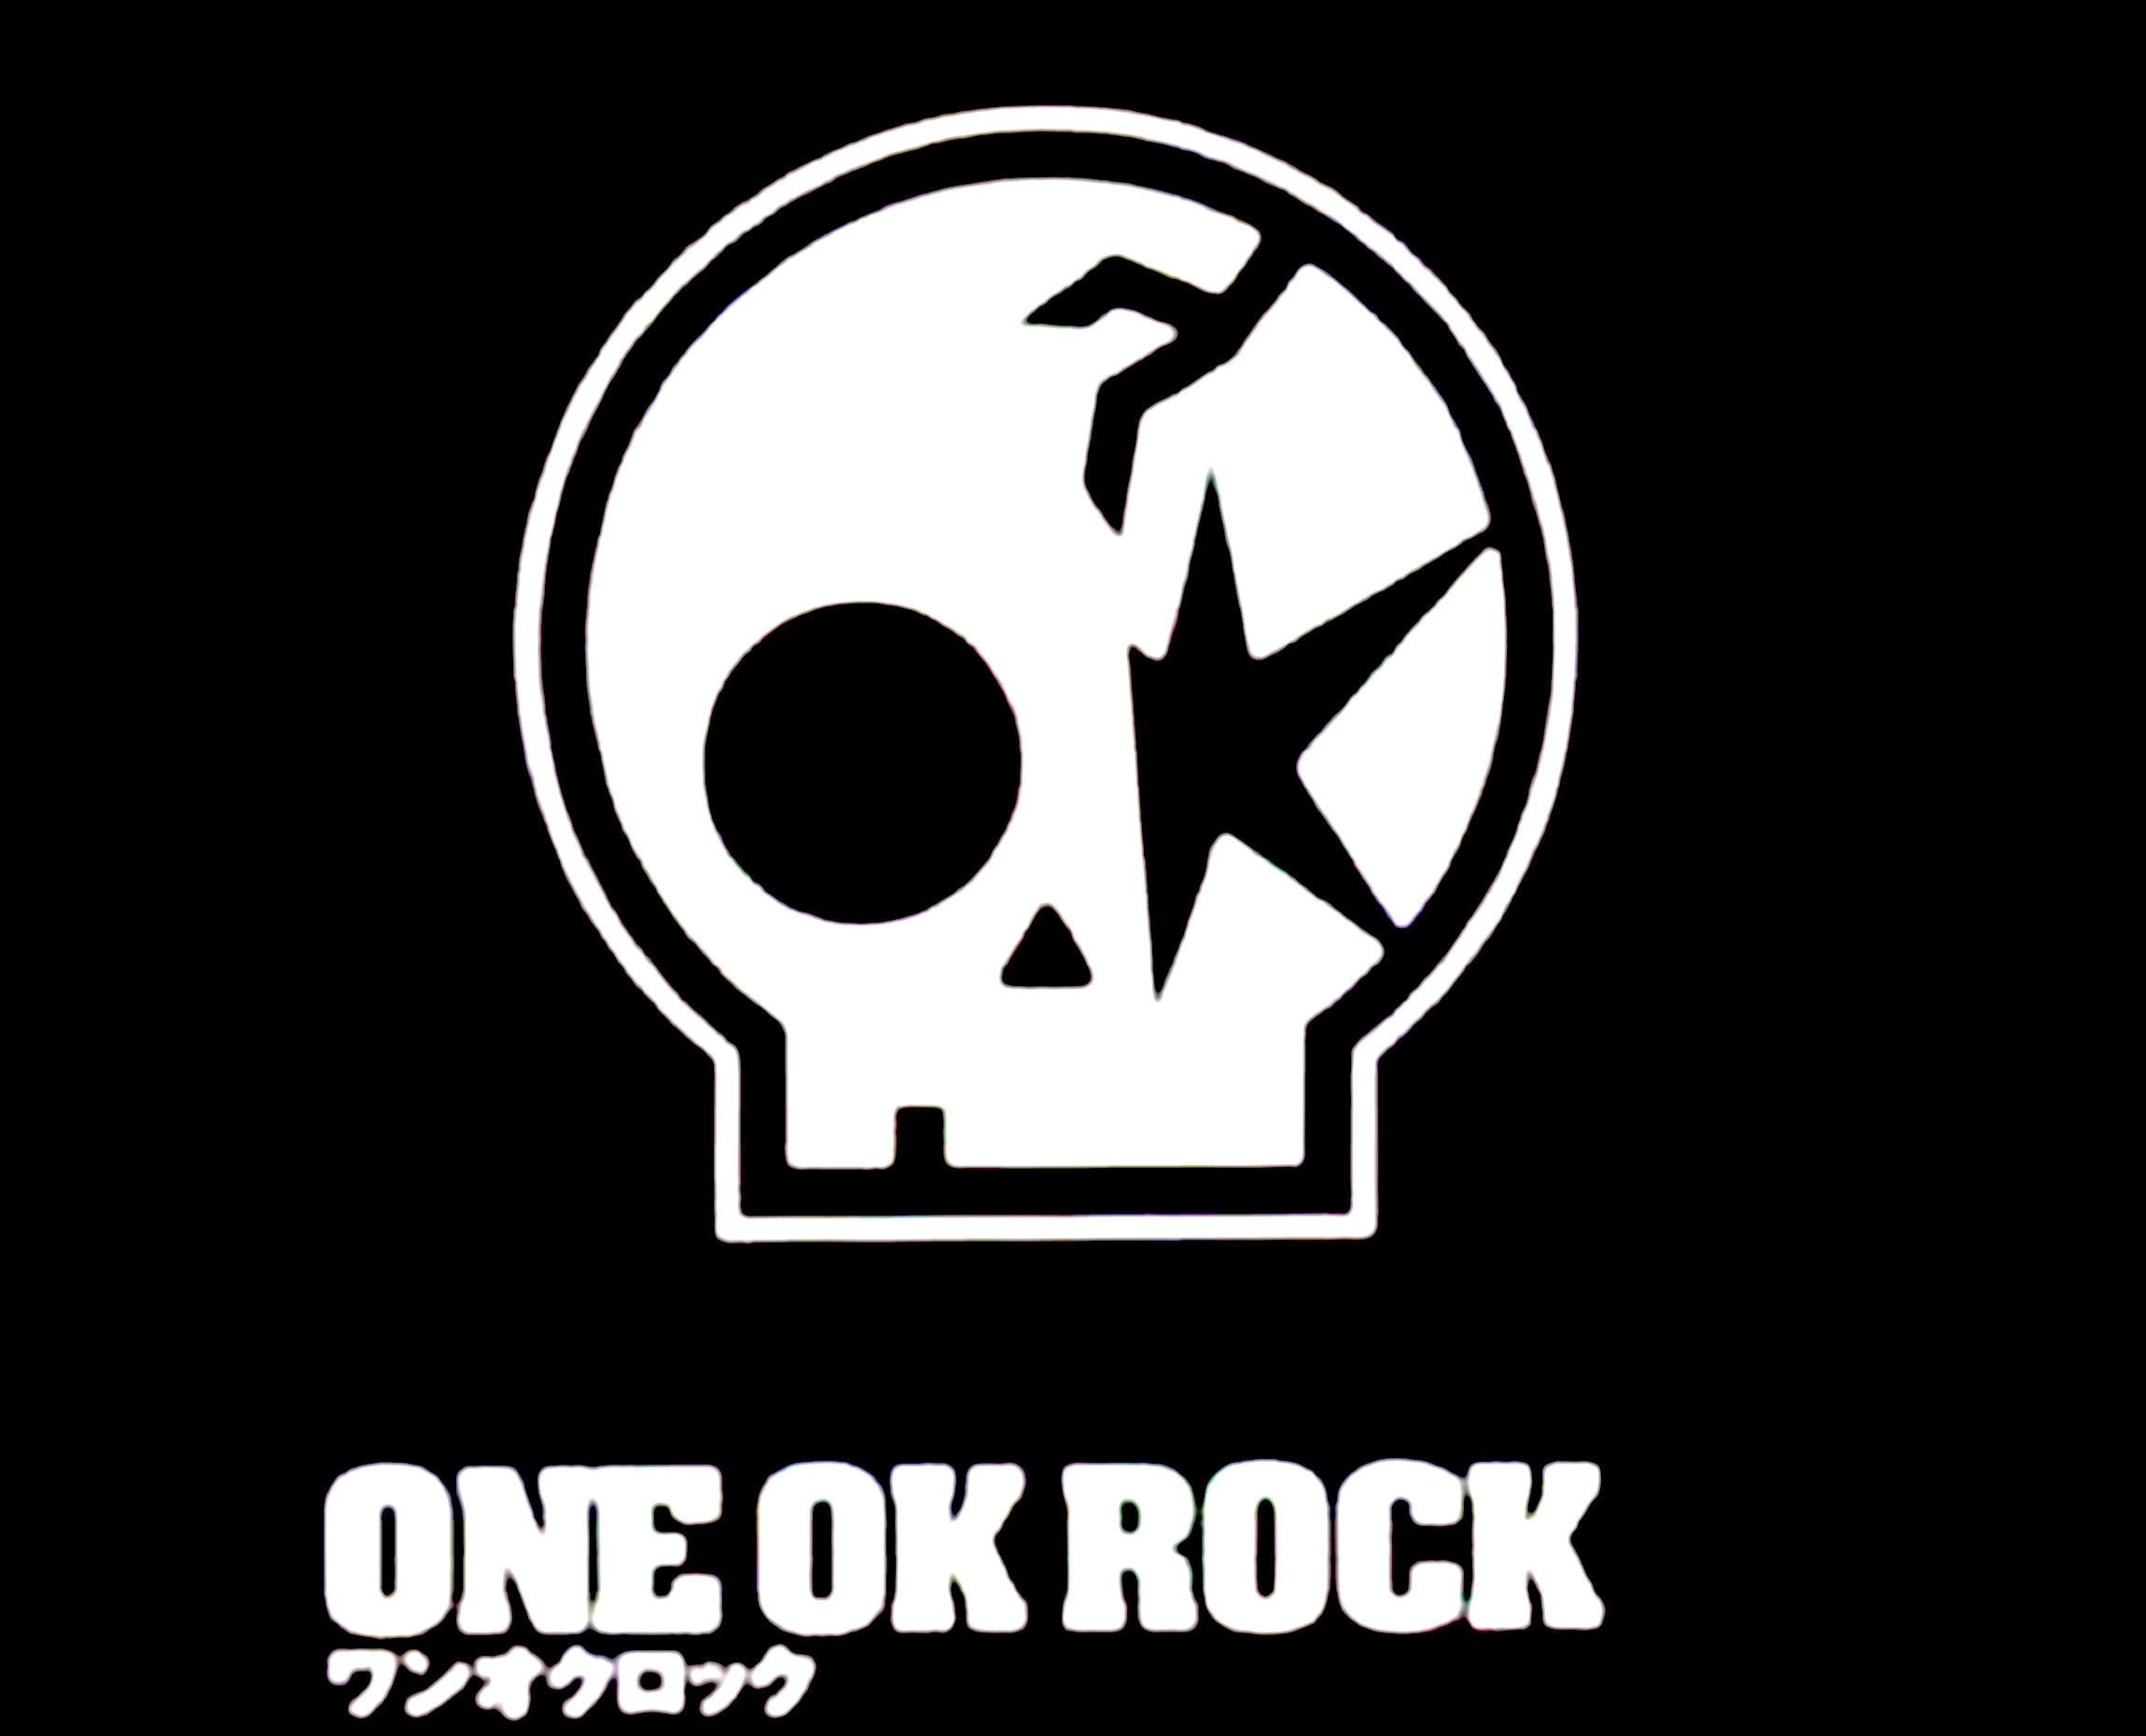 One Ok Rock 壁紙 スマホ